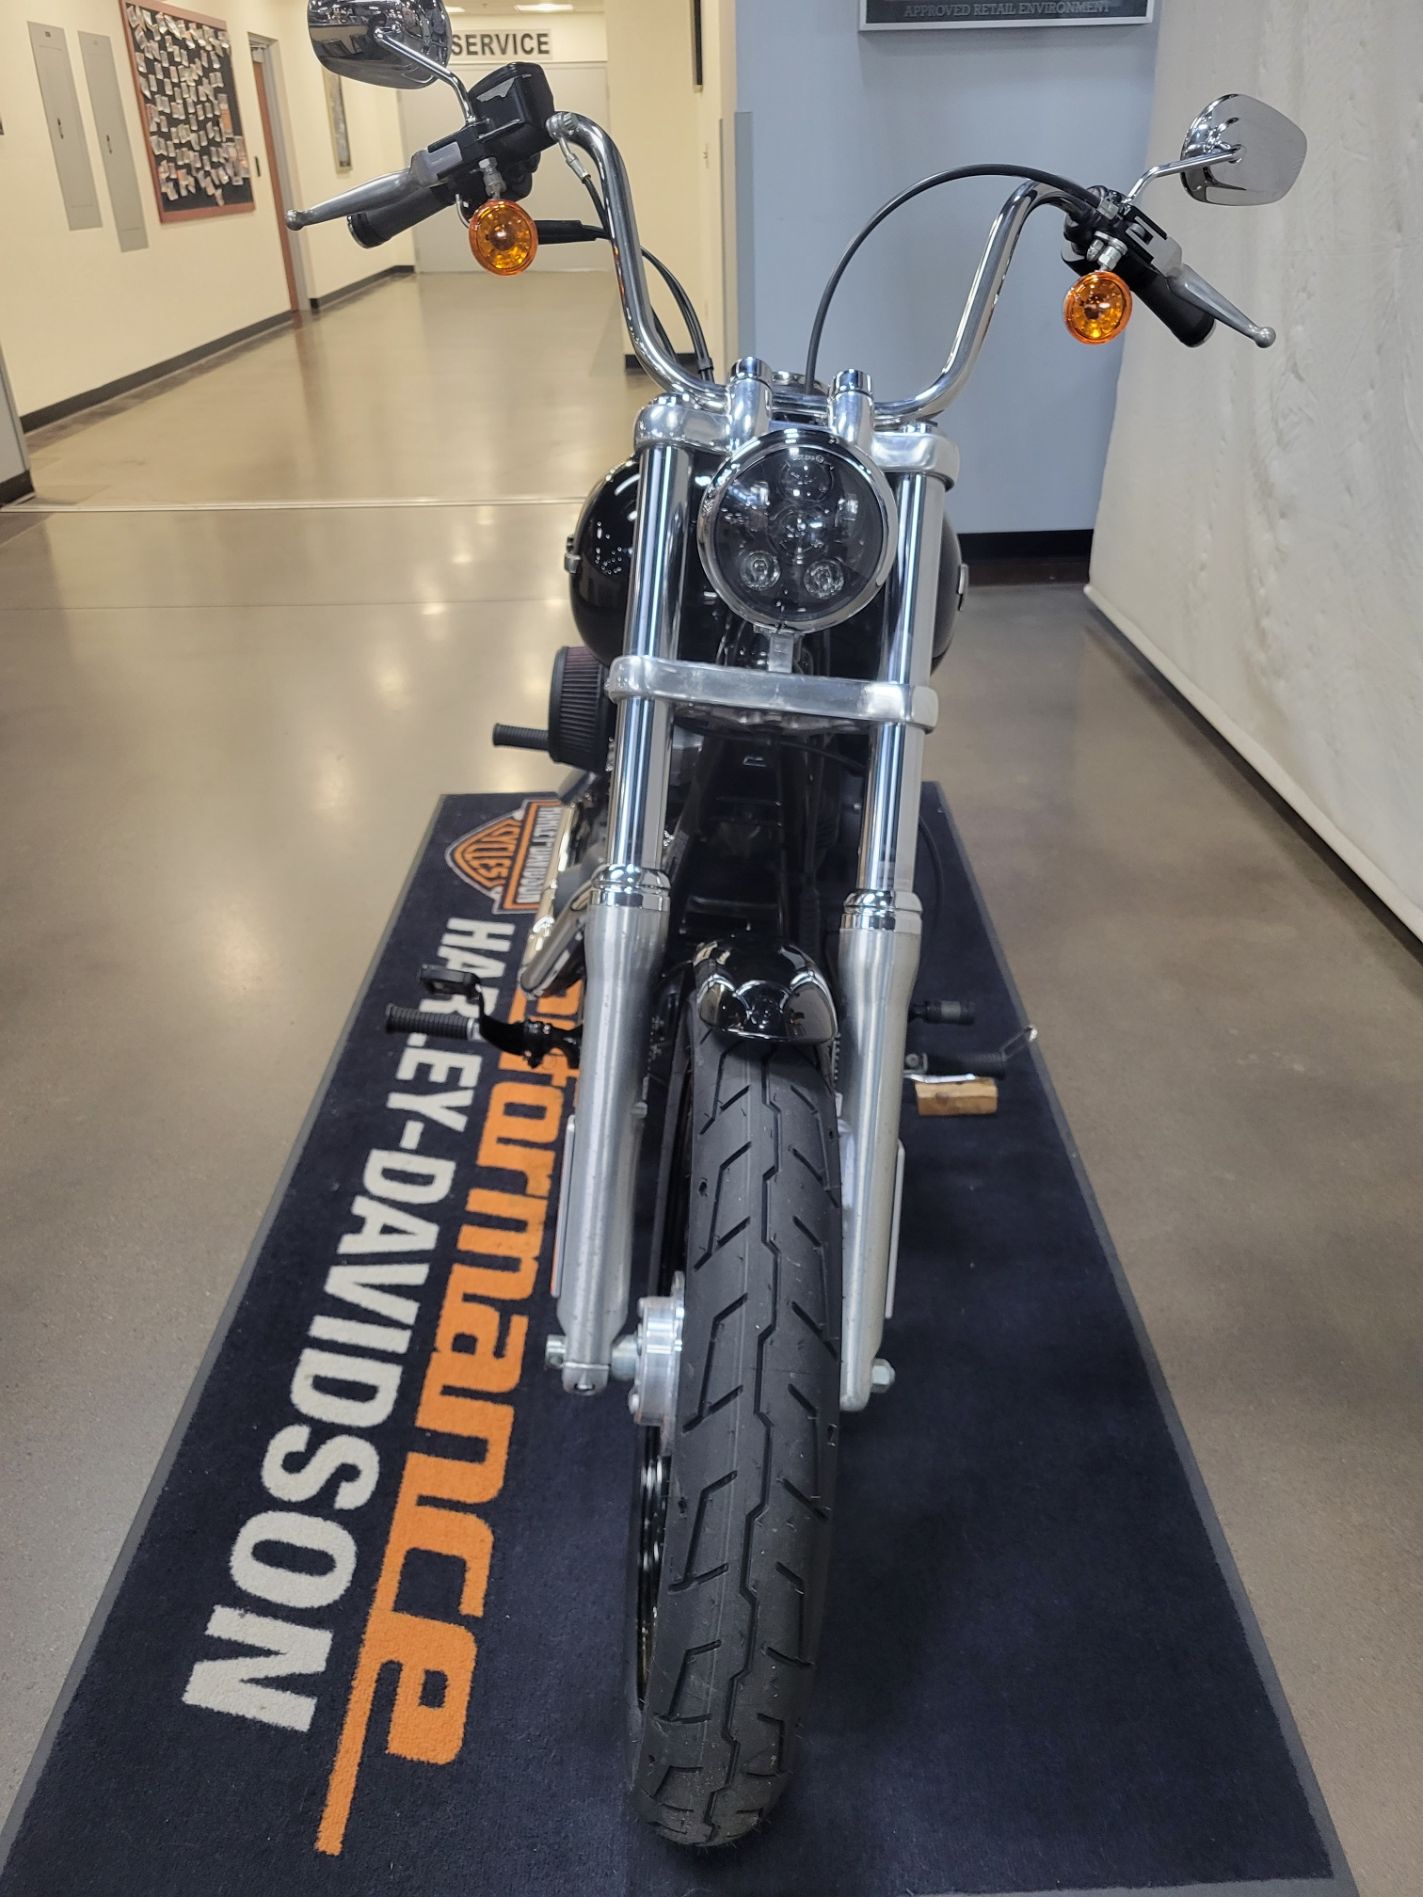 2012 Harley-Davidson Dyna® Street Bob® in Syracuse, New York - Photo 6